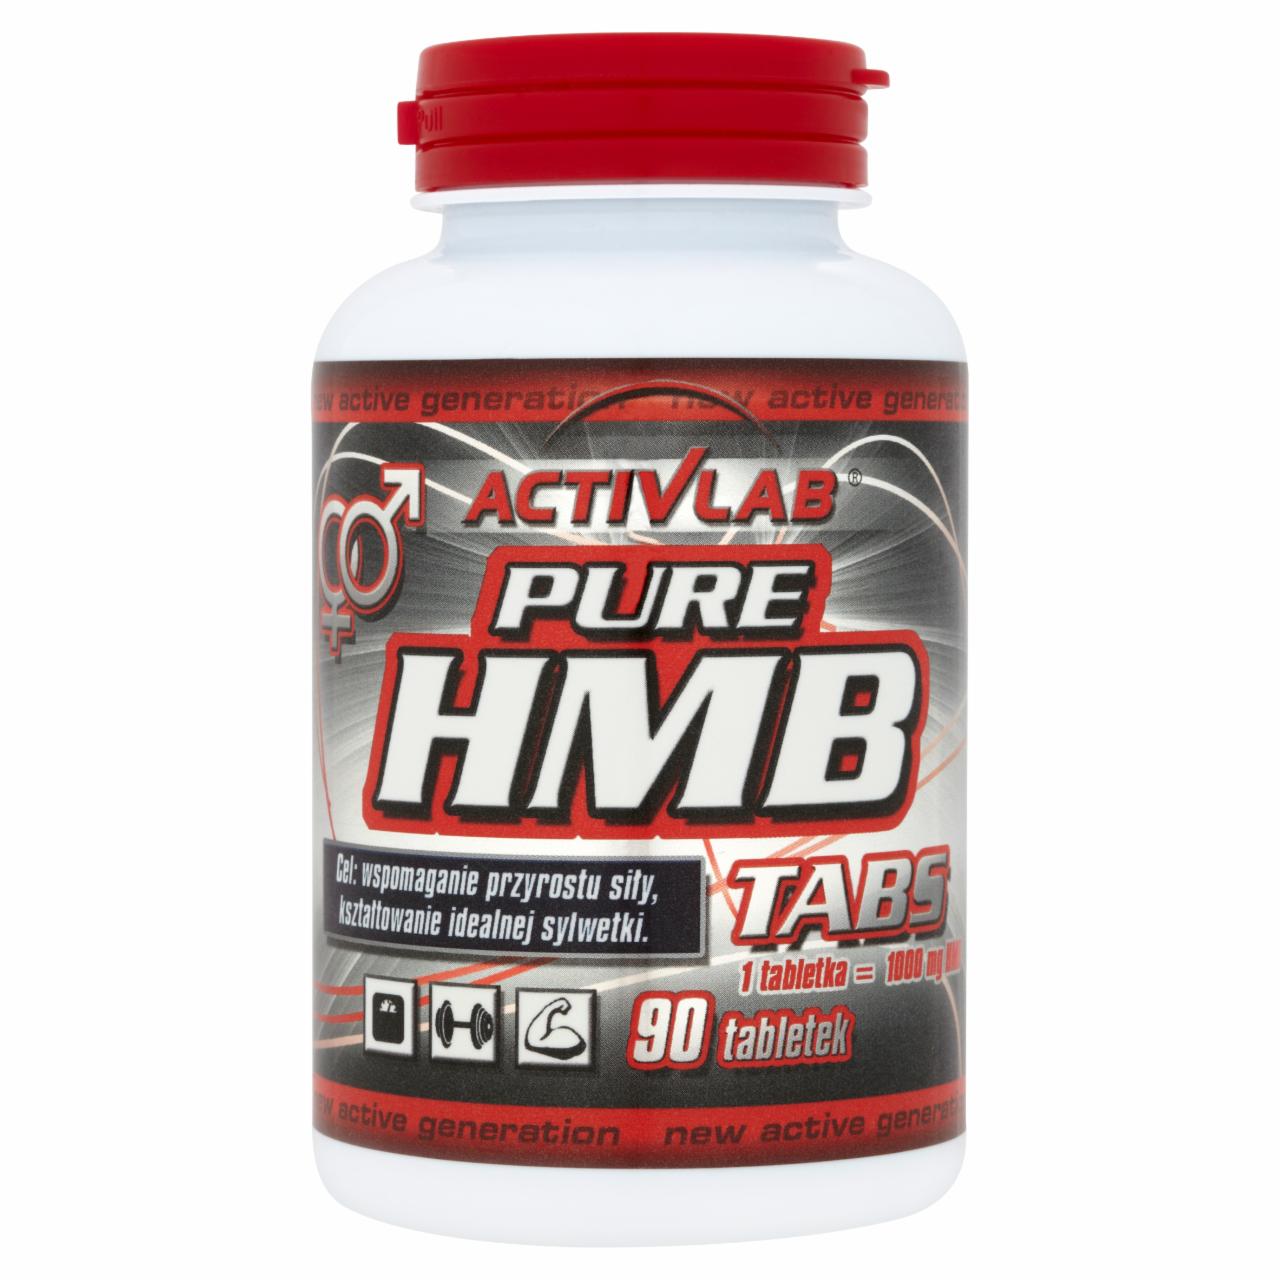 Zdjęcia - ActivLab Pure HMB Tabs Suplement diety 90 tabletek